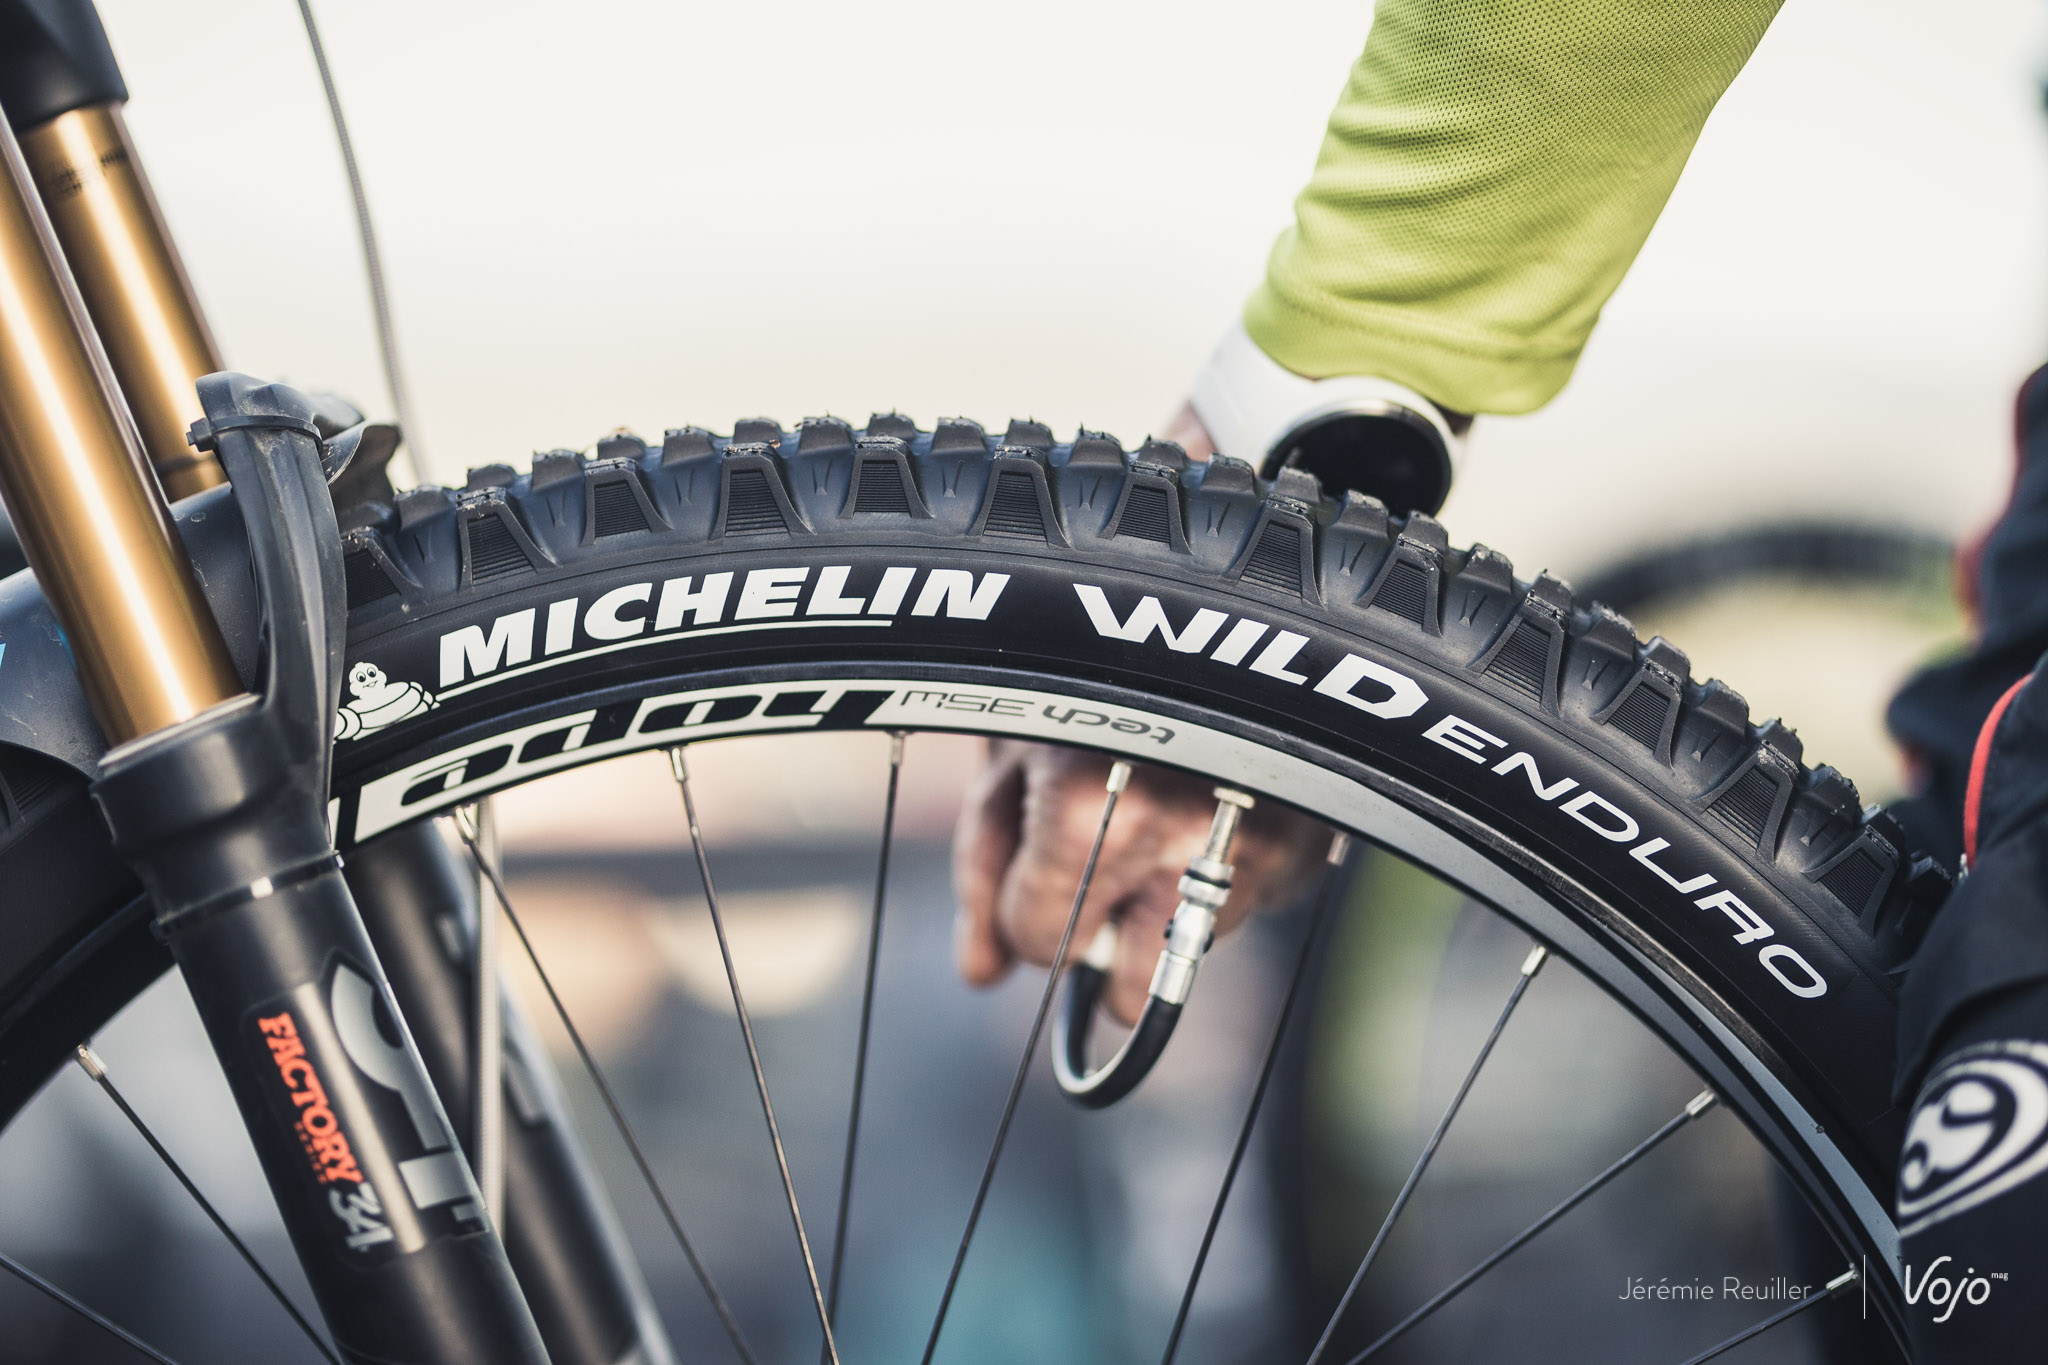 Prise en main | Michelin Wild Enduro : la nouvelle gamme enduro du bibendum